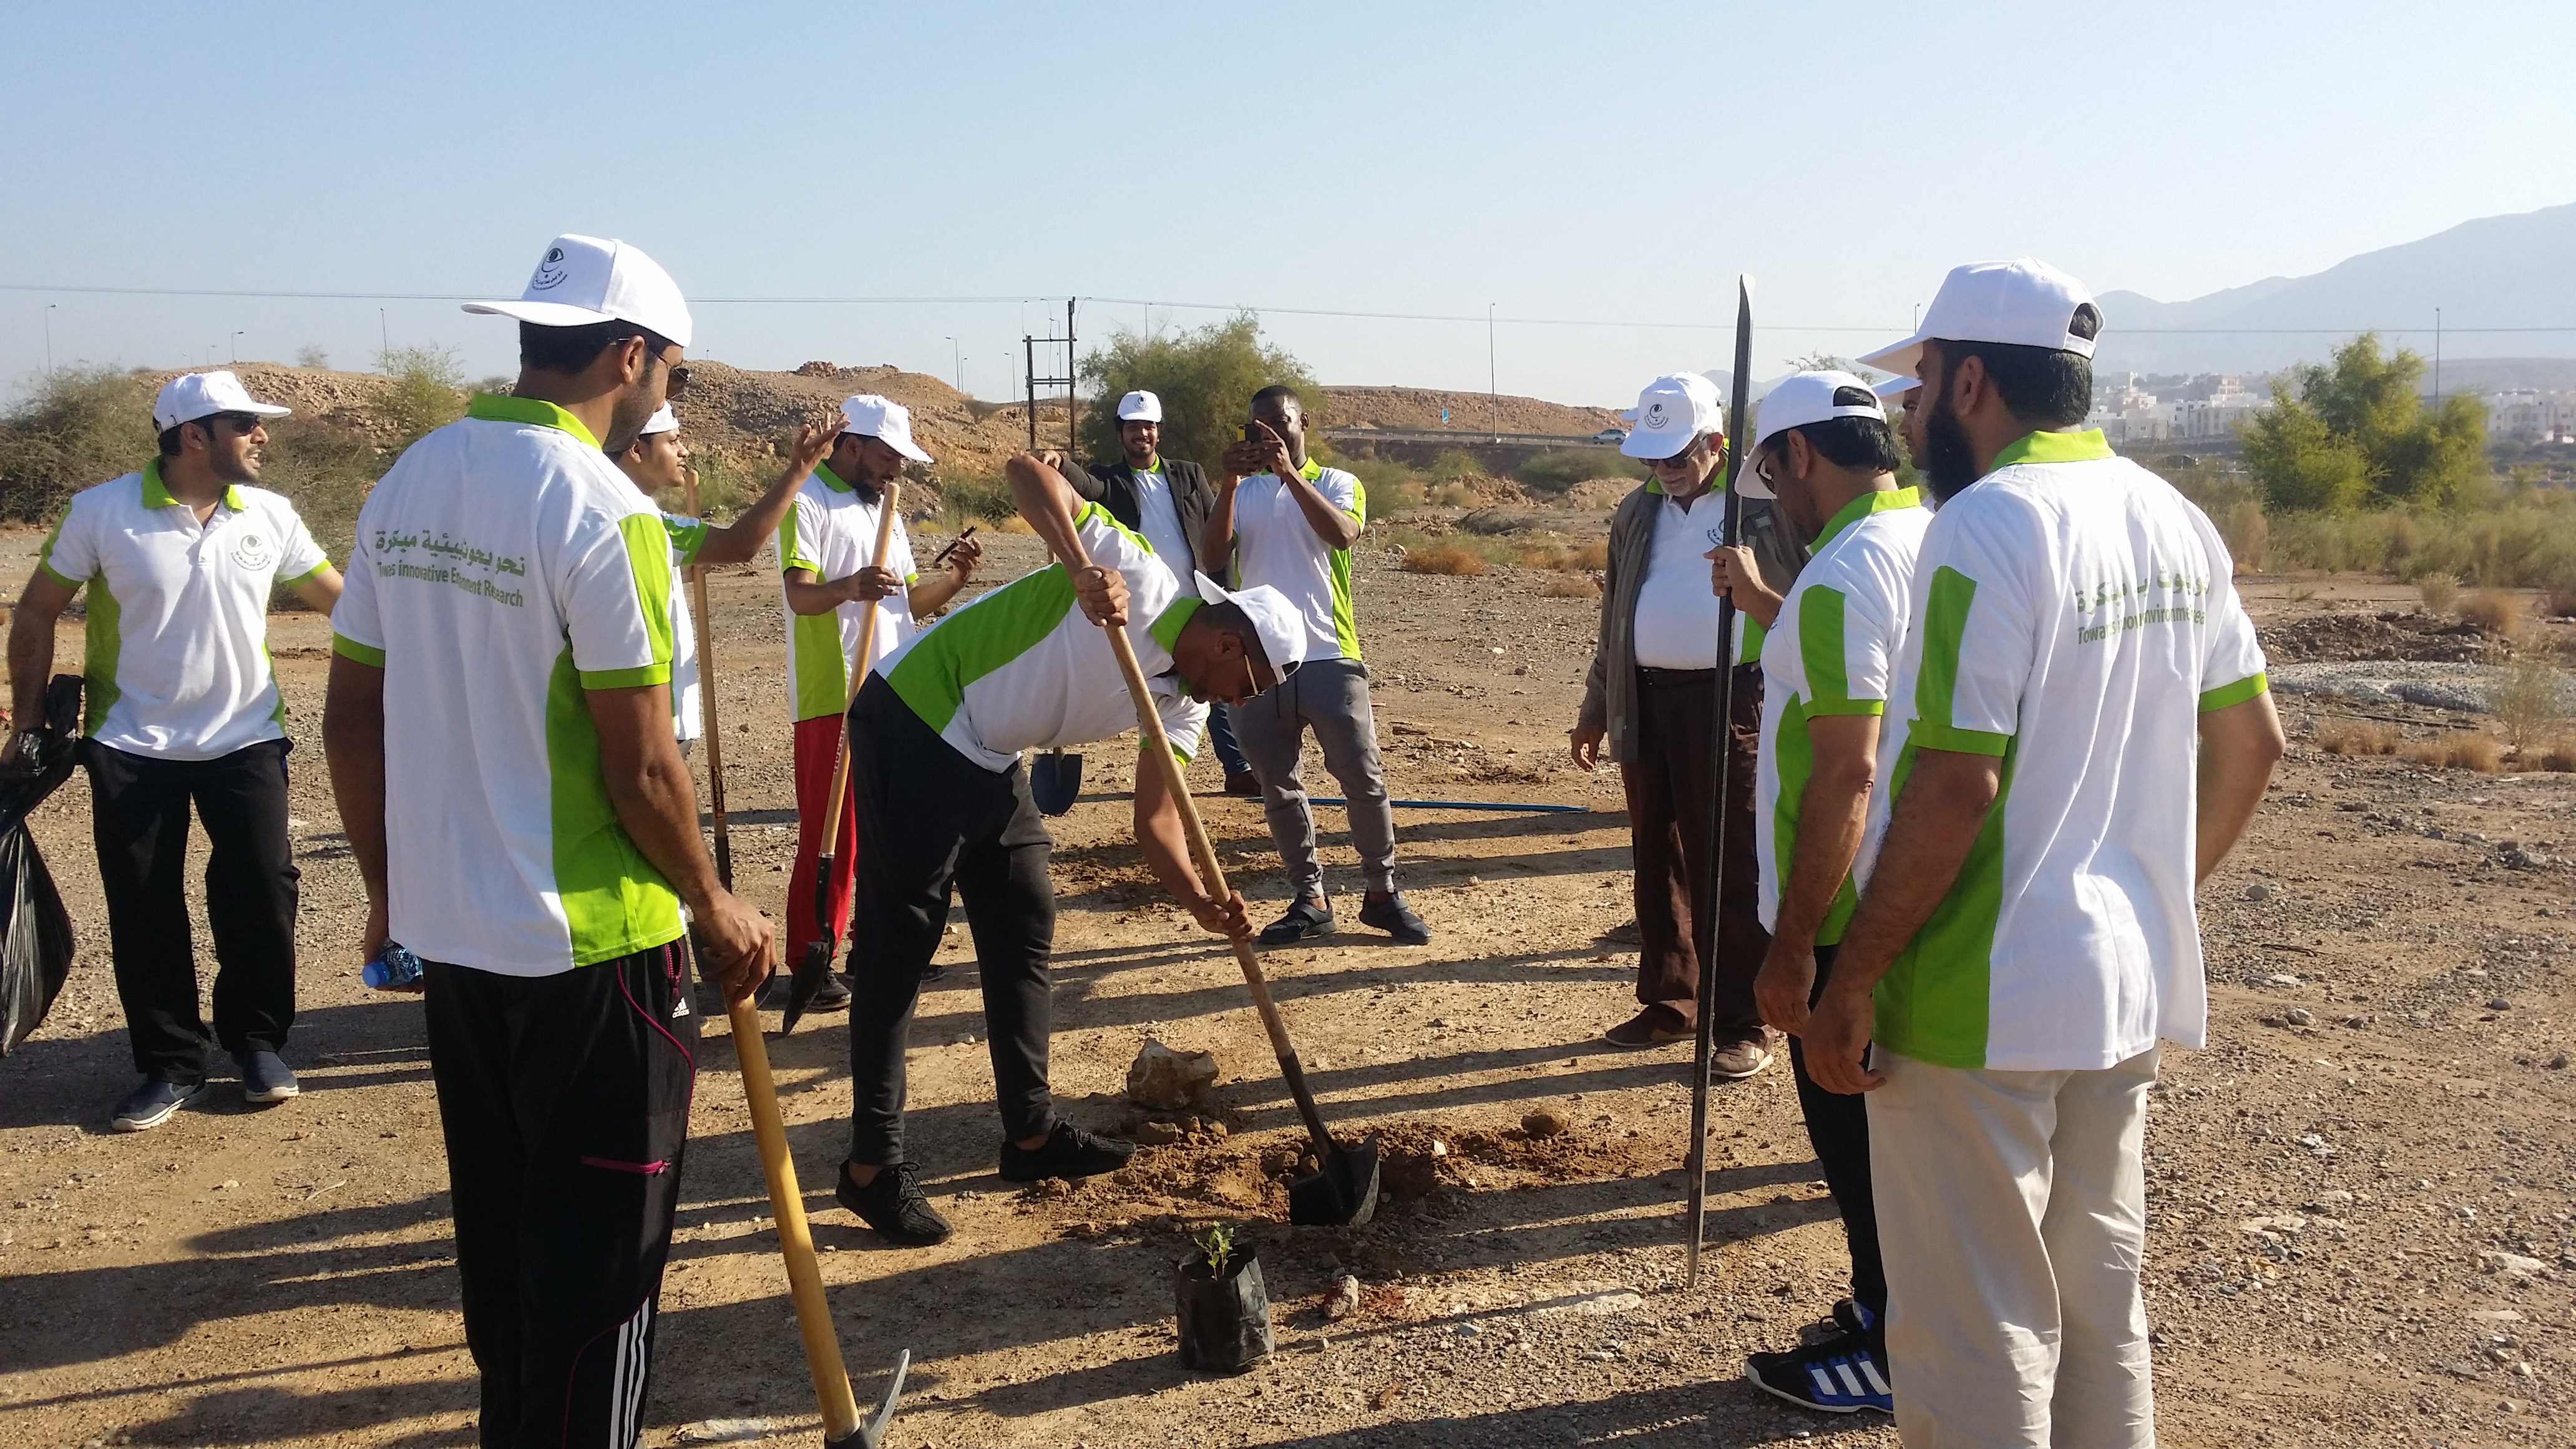 600 new tree saplings will now help fight desertification in Oman